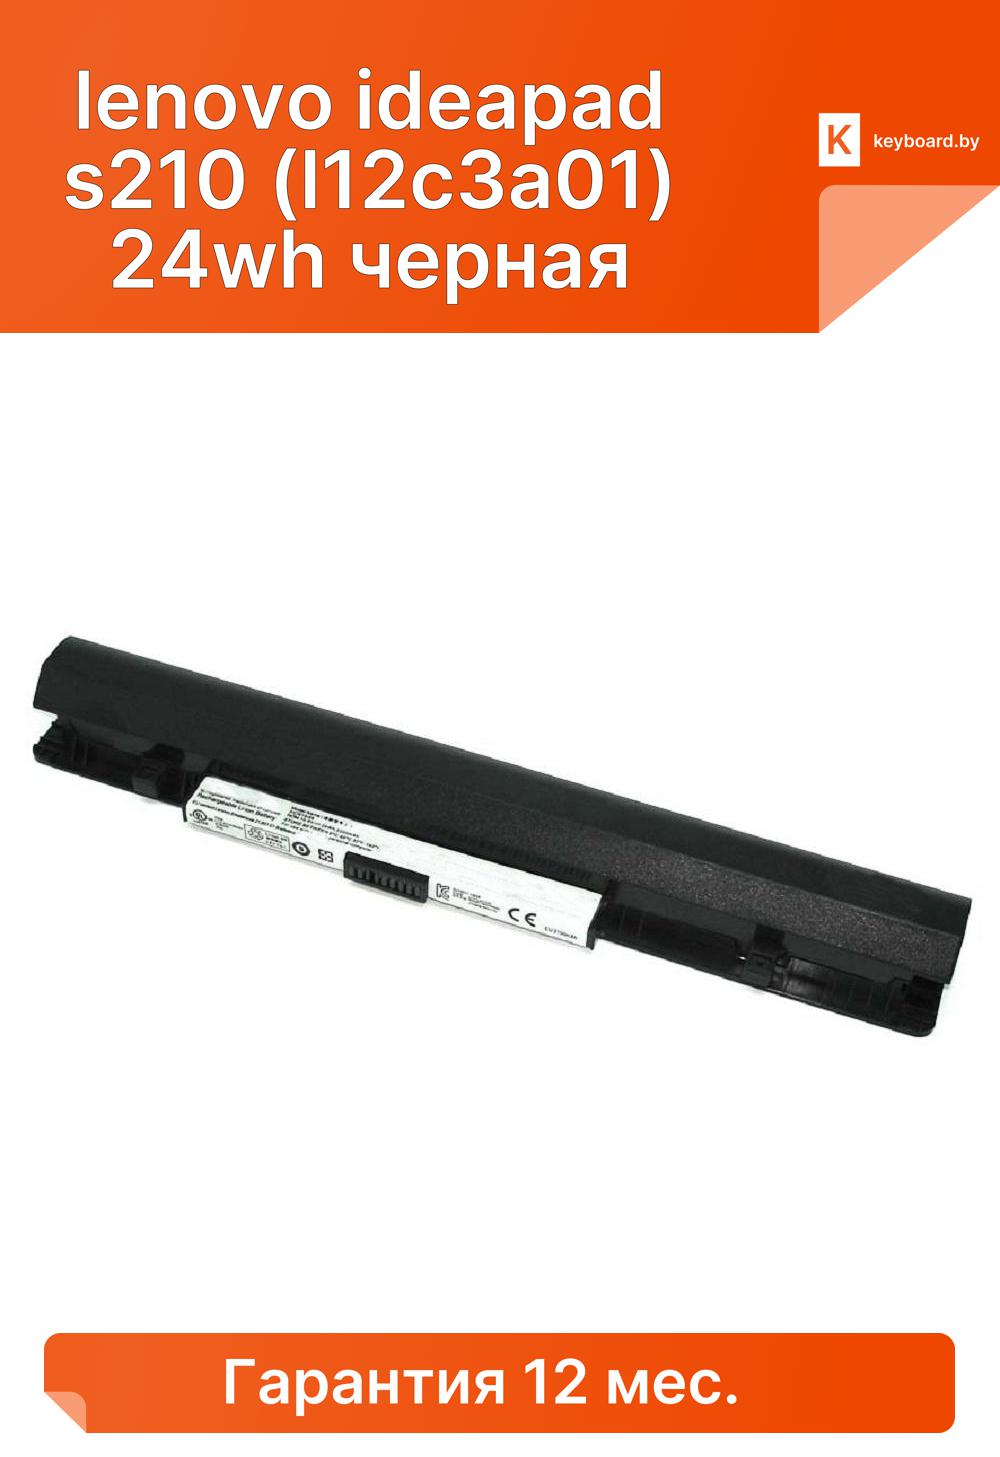 Аккумуляторная батарея для ноутбука lenovo ideapad s210 (l12c3a01) 24wh черная